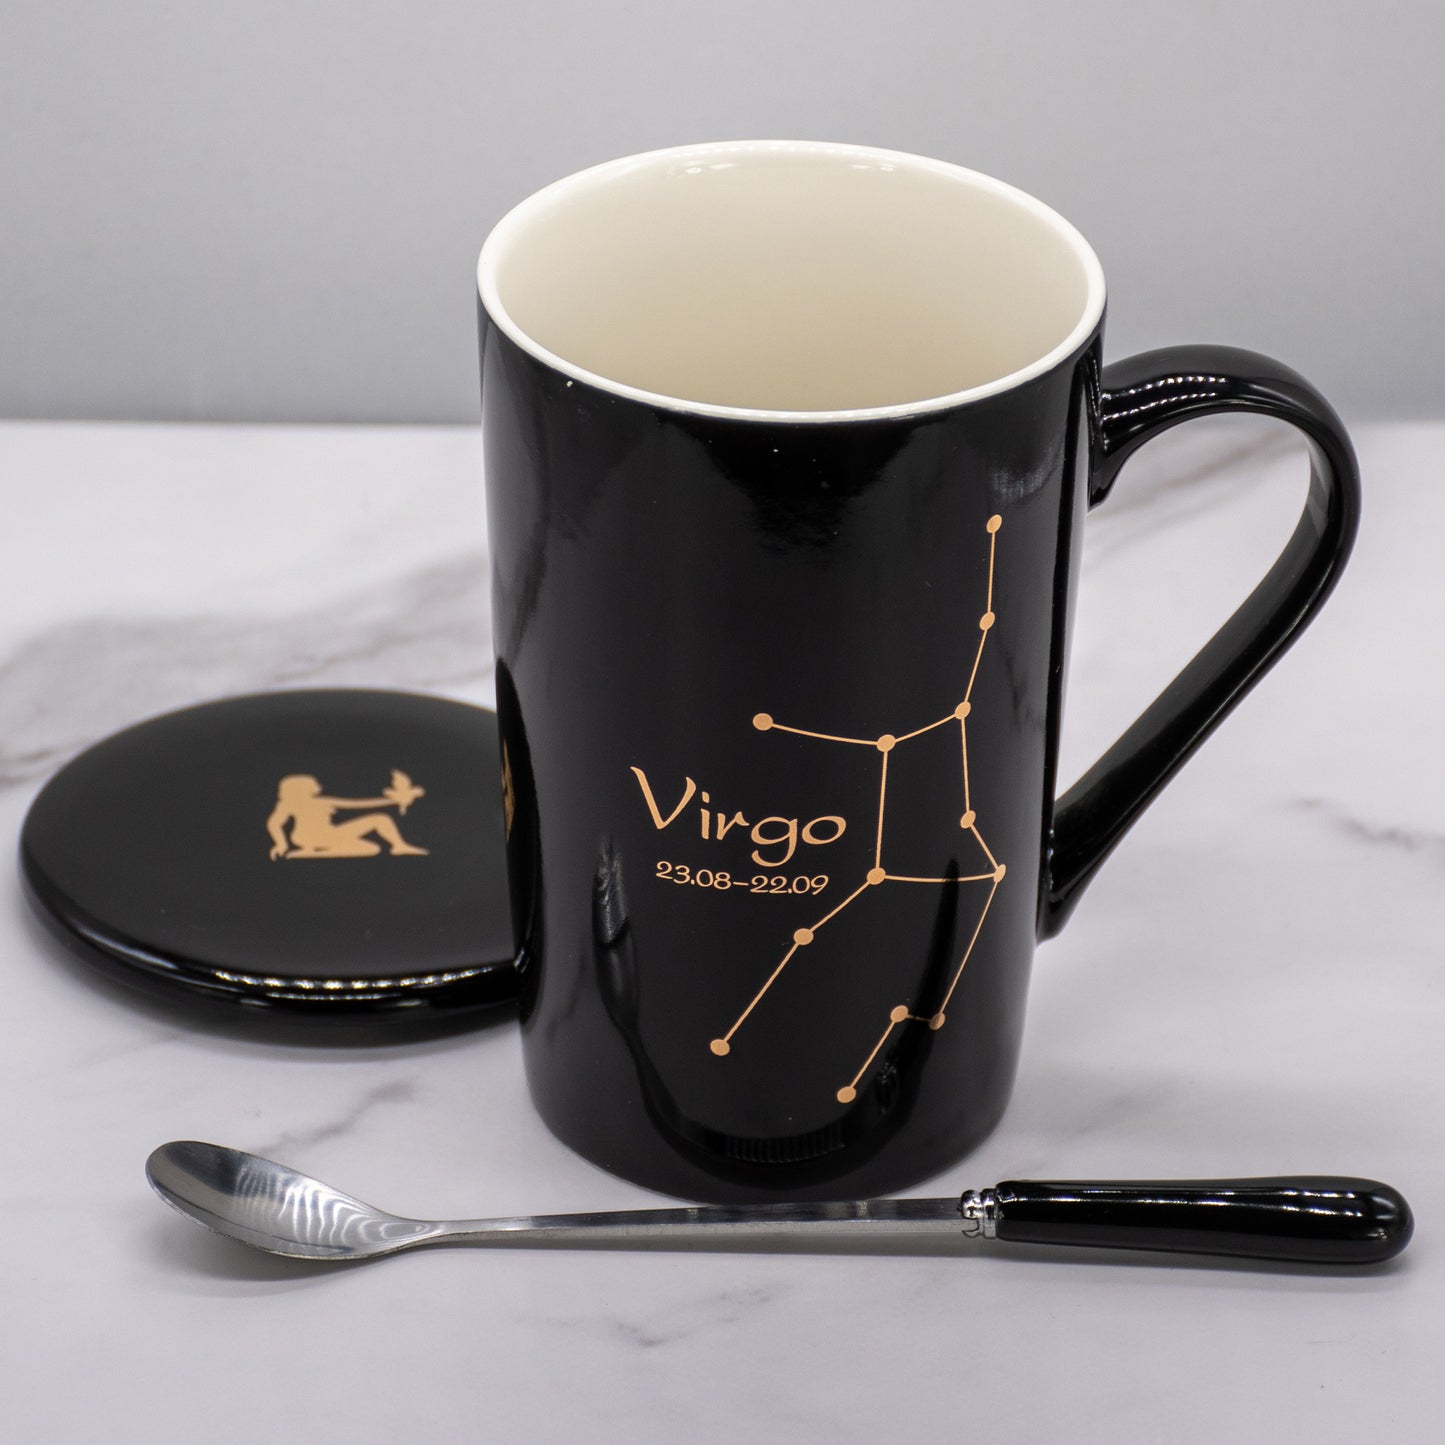 Virgo Zodiac Porcelain Mug with Spoon & Lid